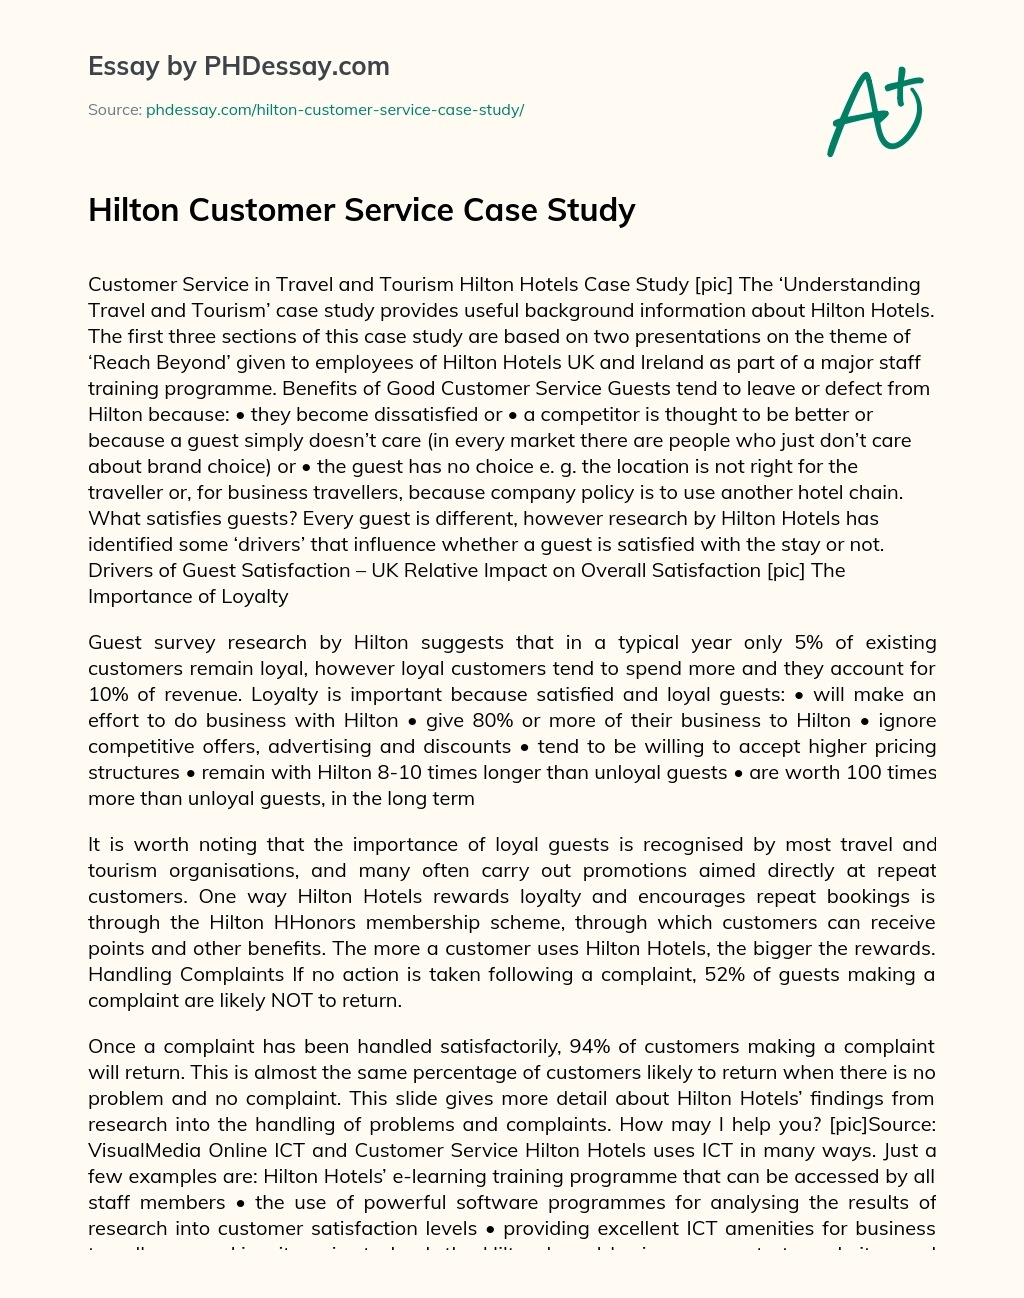 Hilton Customer Service Case Study essay